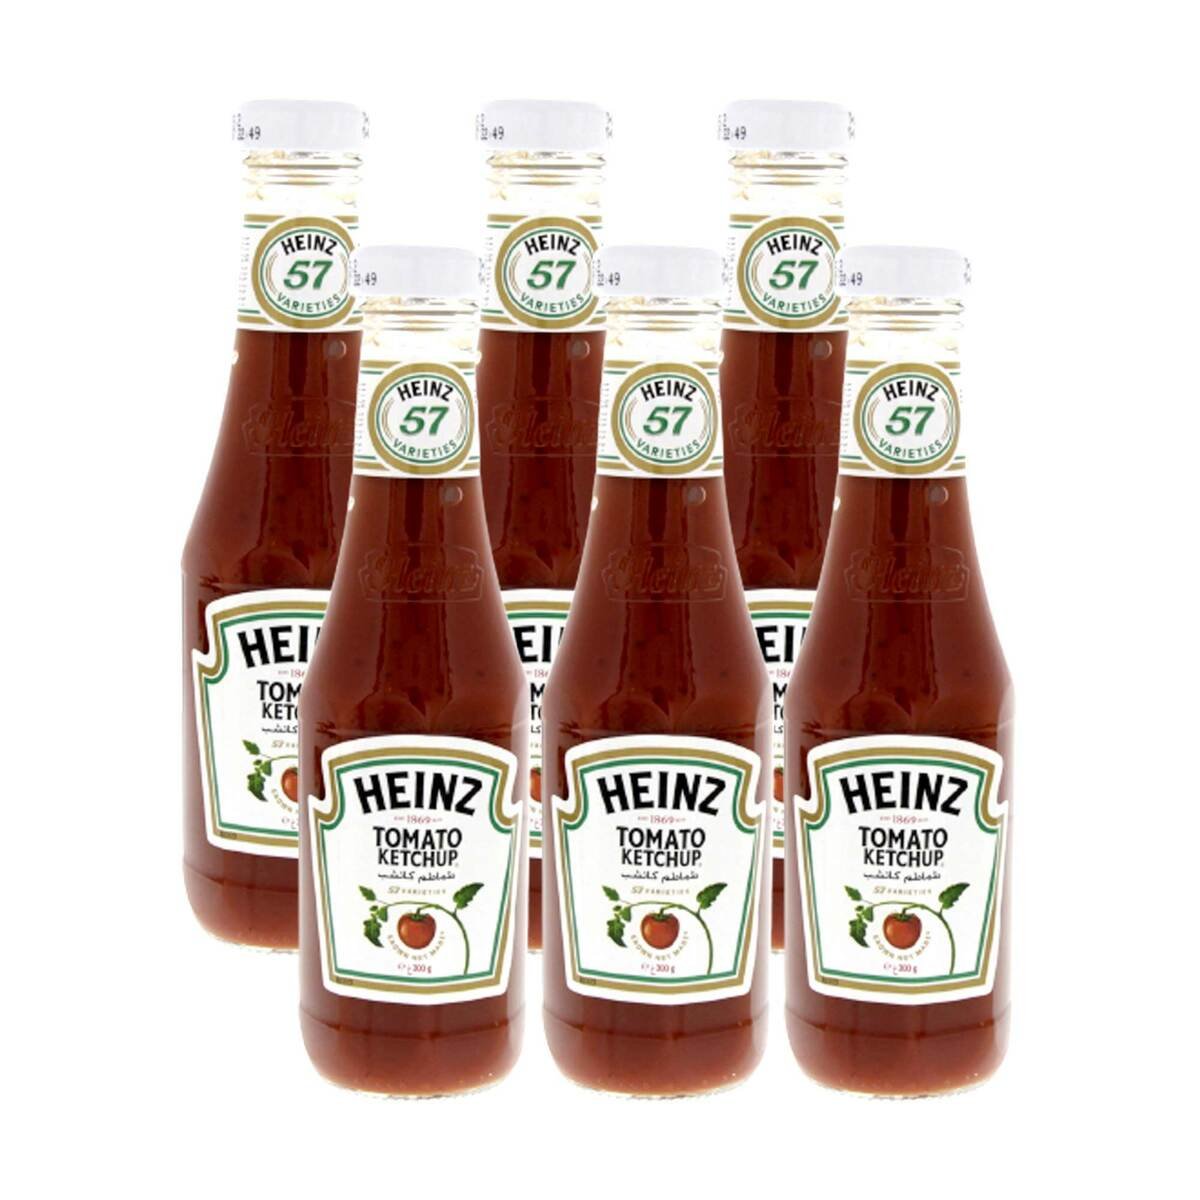 Heinz Tomato Ketchup 6 x 300g